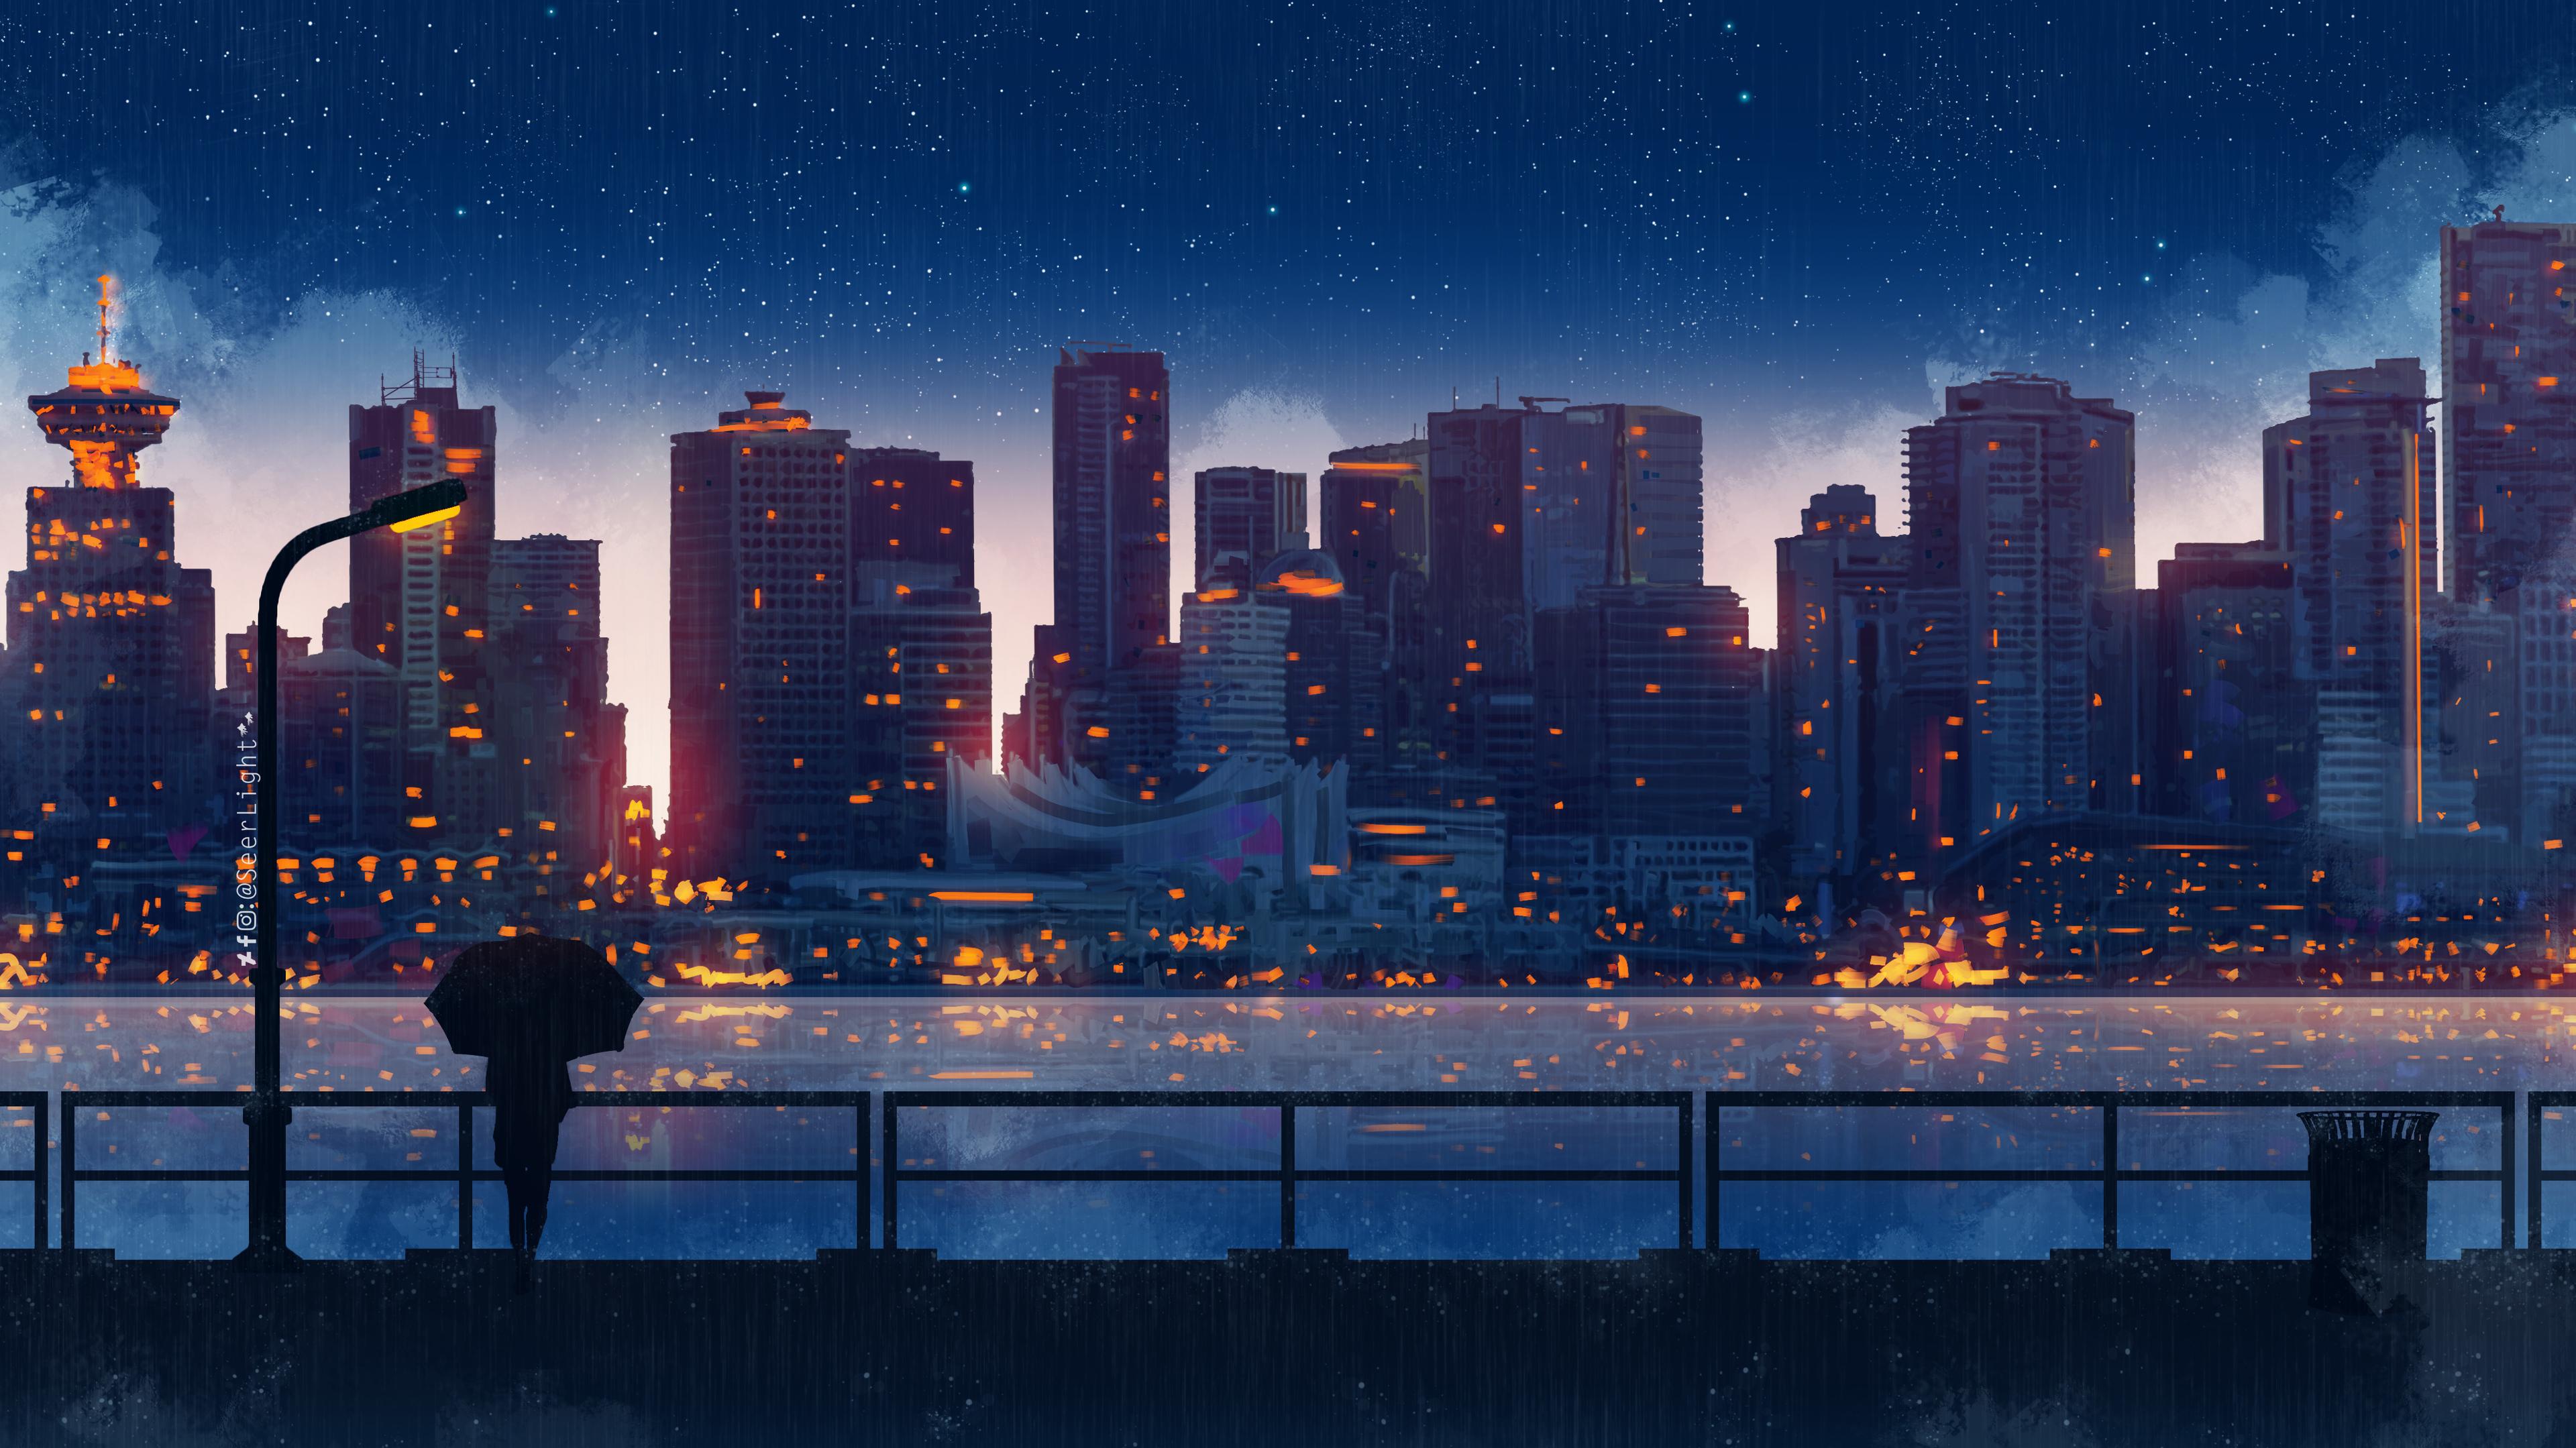 rain - Other & Anime Background Wallpapers on Desktop Nexus (Image 1417687)